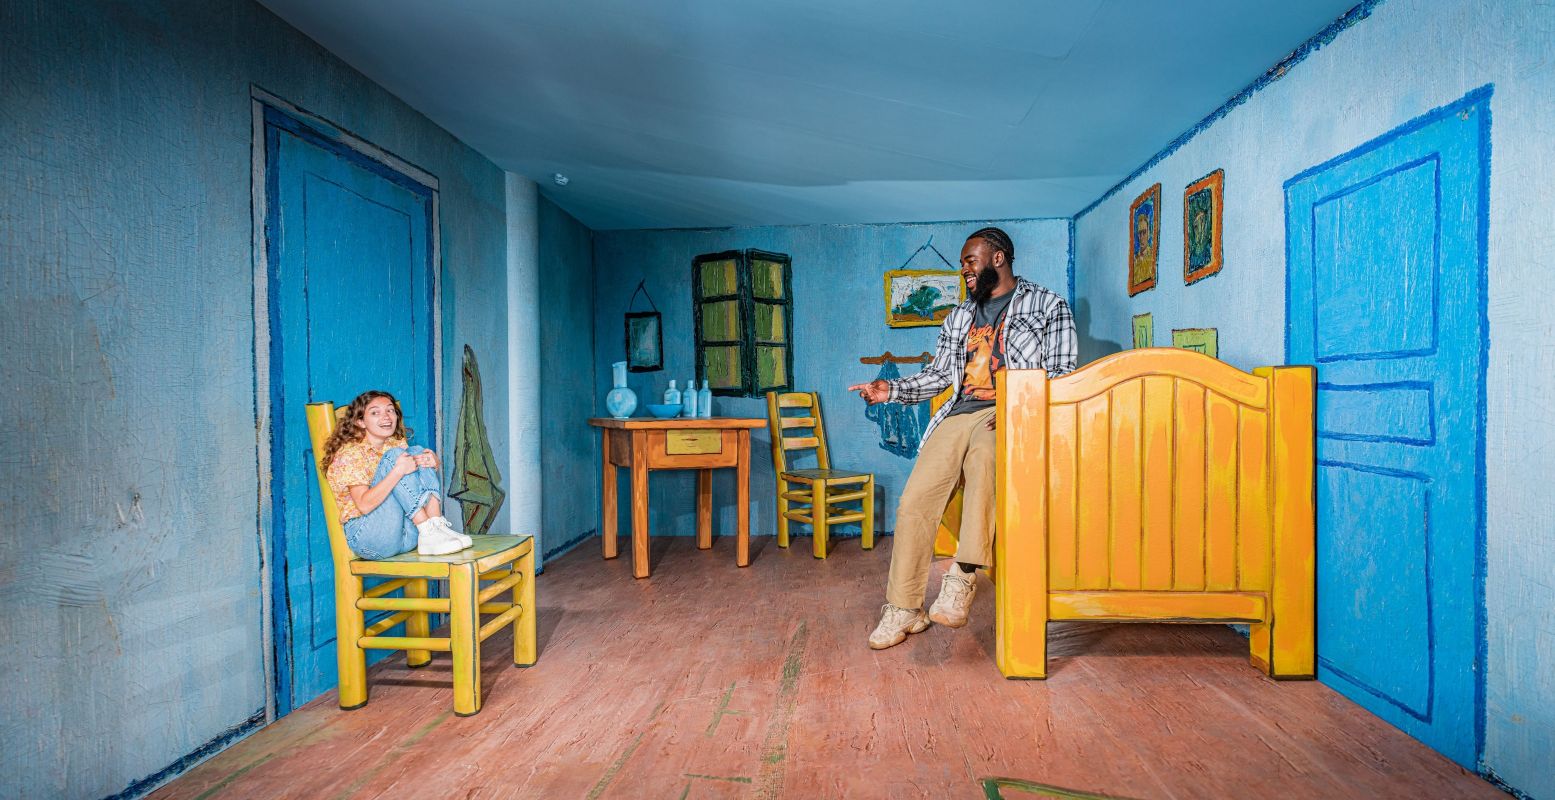 De Slaapkamer van Vincent van Gogh als perspectiefkamer. Foto: Madurodam